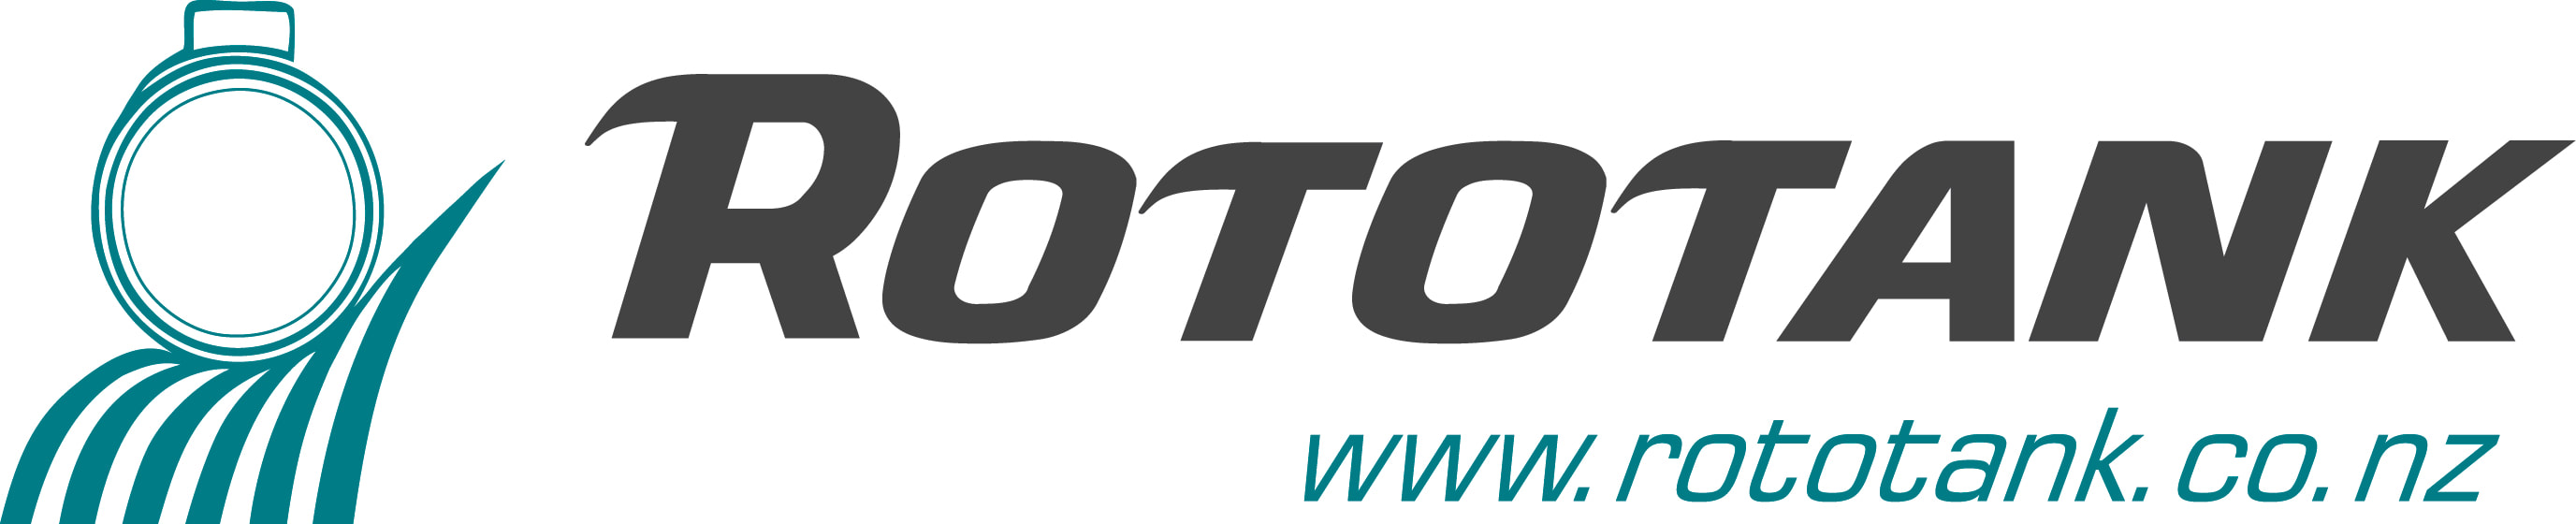 rototank-logo-website